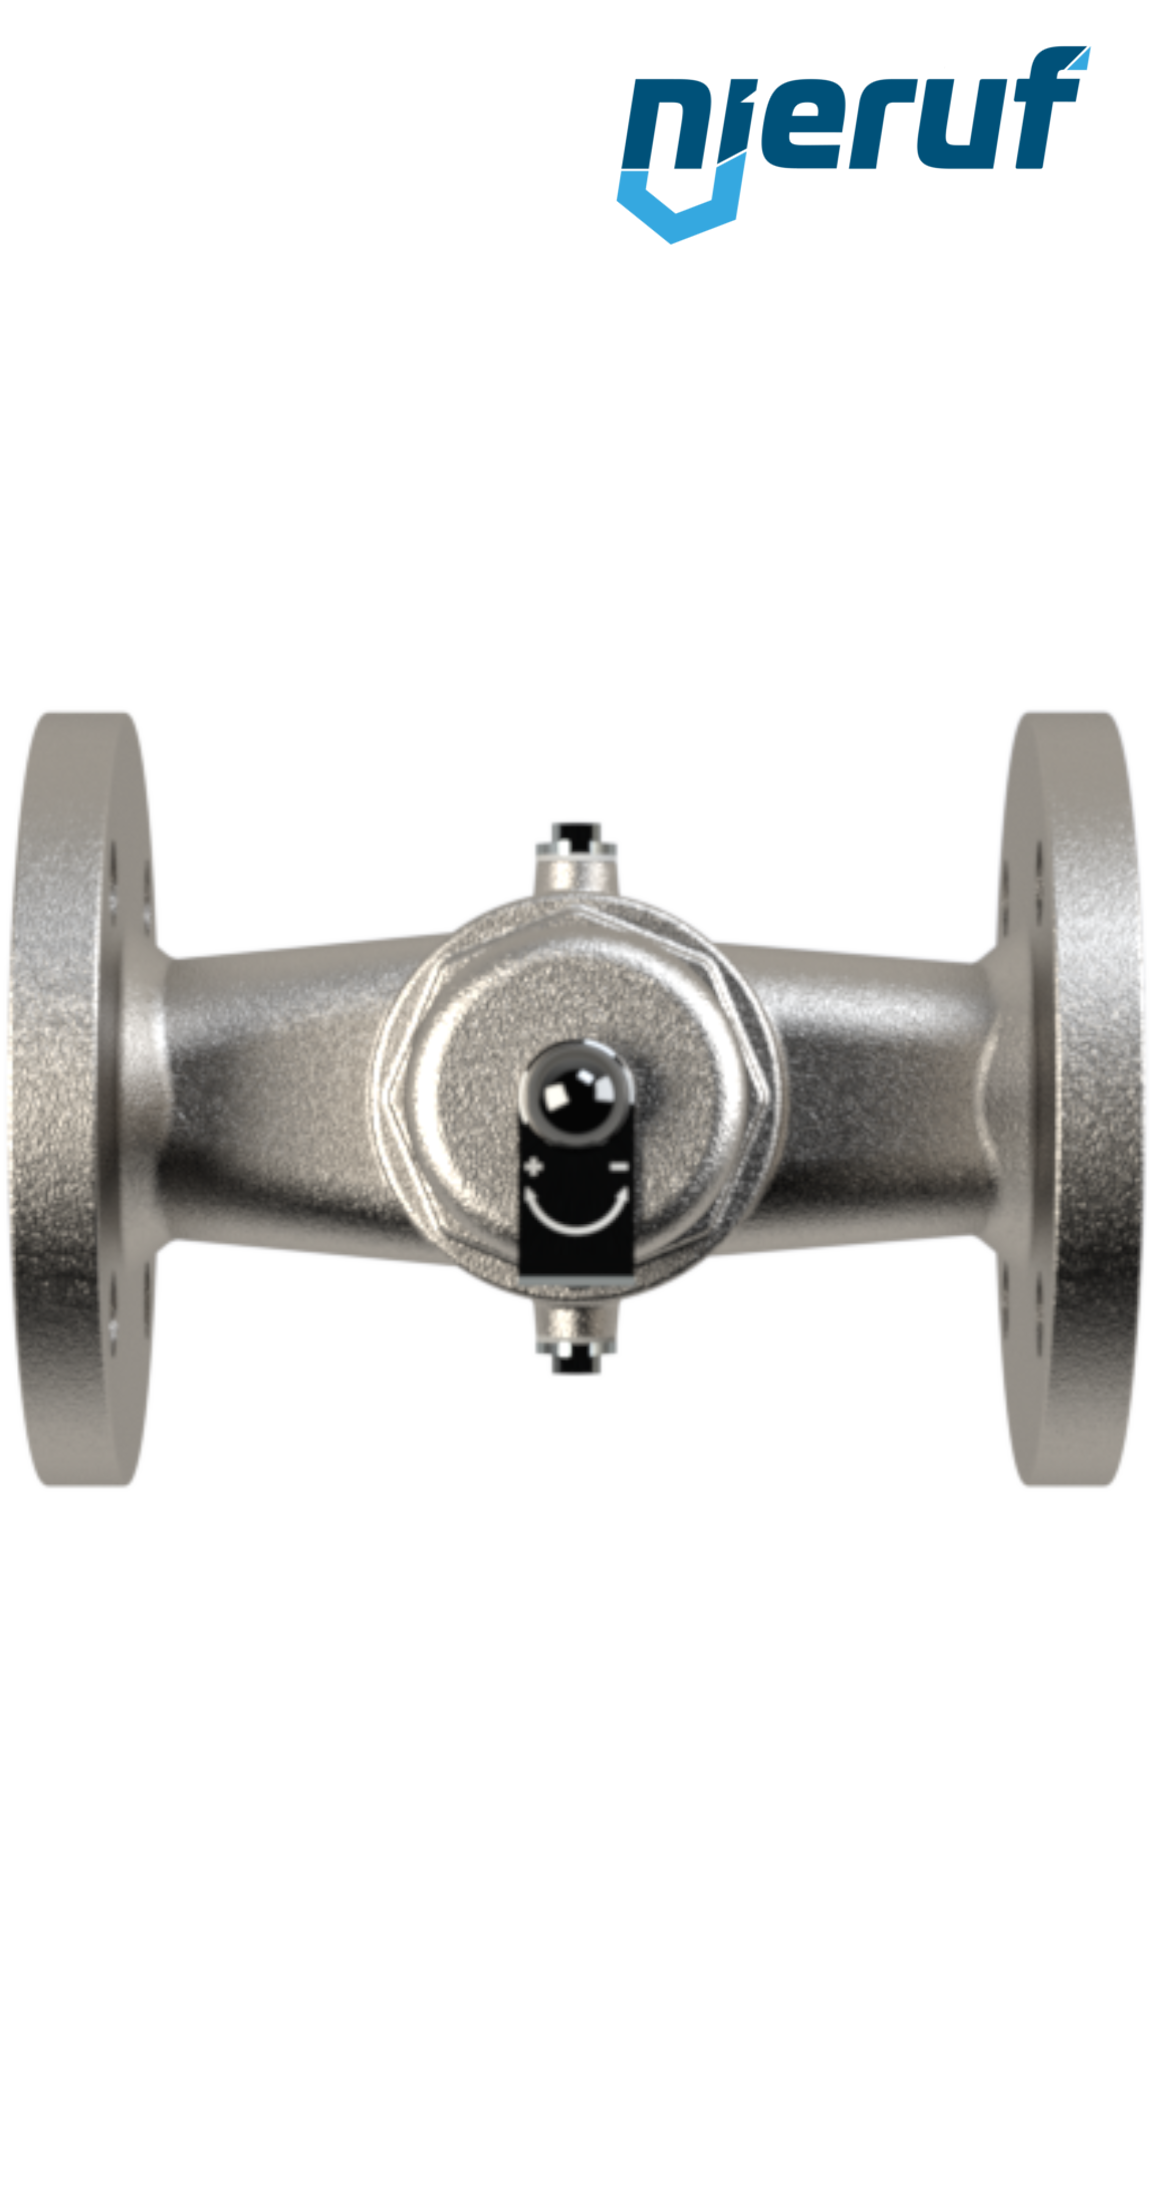 Flange-pressure reducing valve DN 40 PN40 DM08 stainless steel FKM 5.0 - 15.0 bar